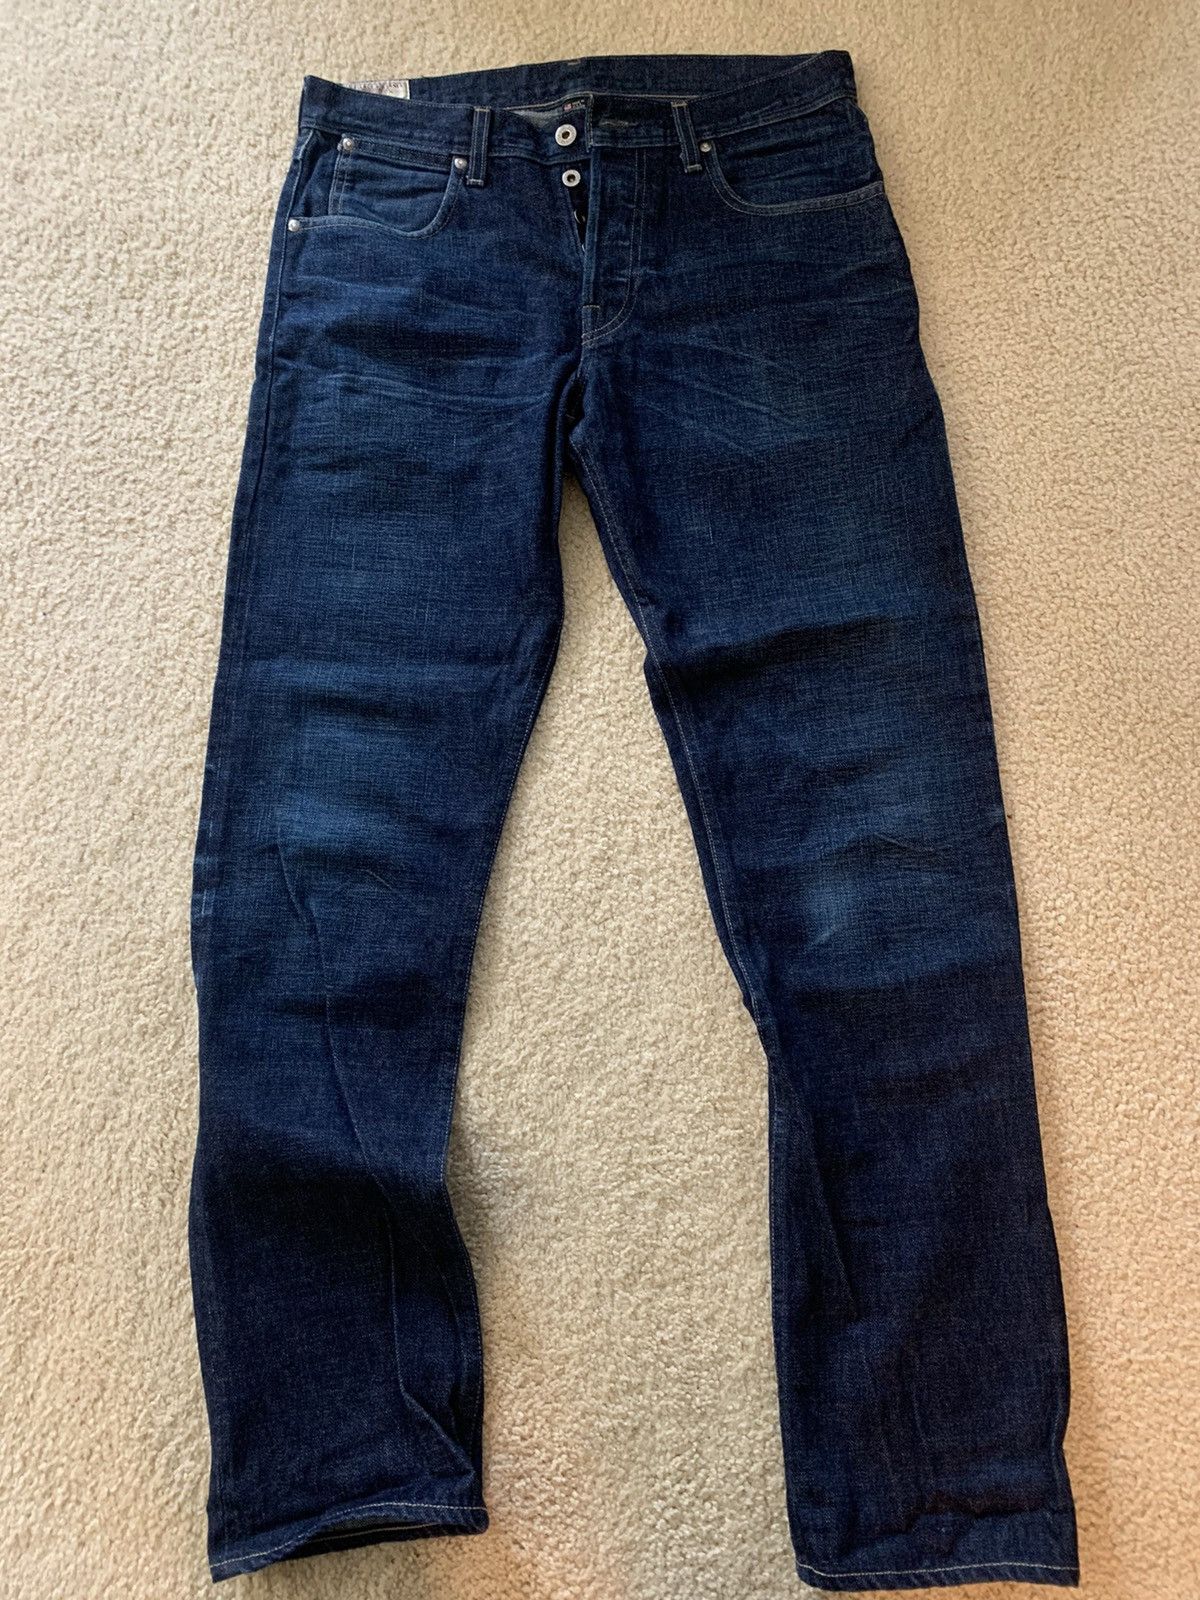 Wallace & Barnes Slim Japanese Three Looms Selvedge Jeans 31/34 | Grailed